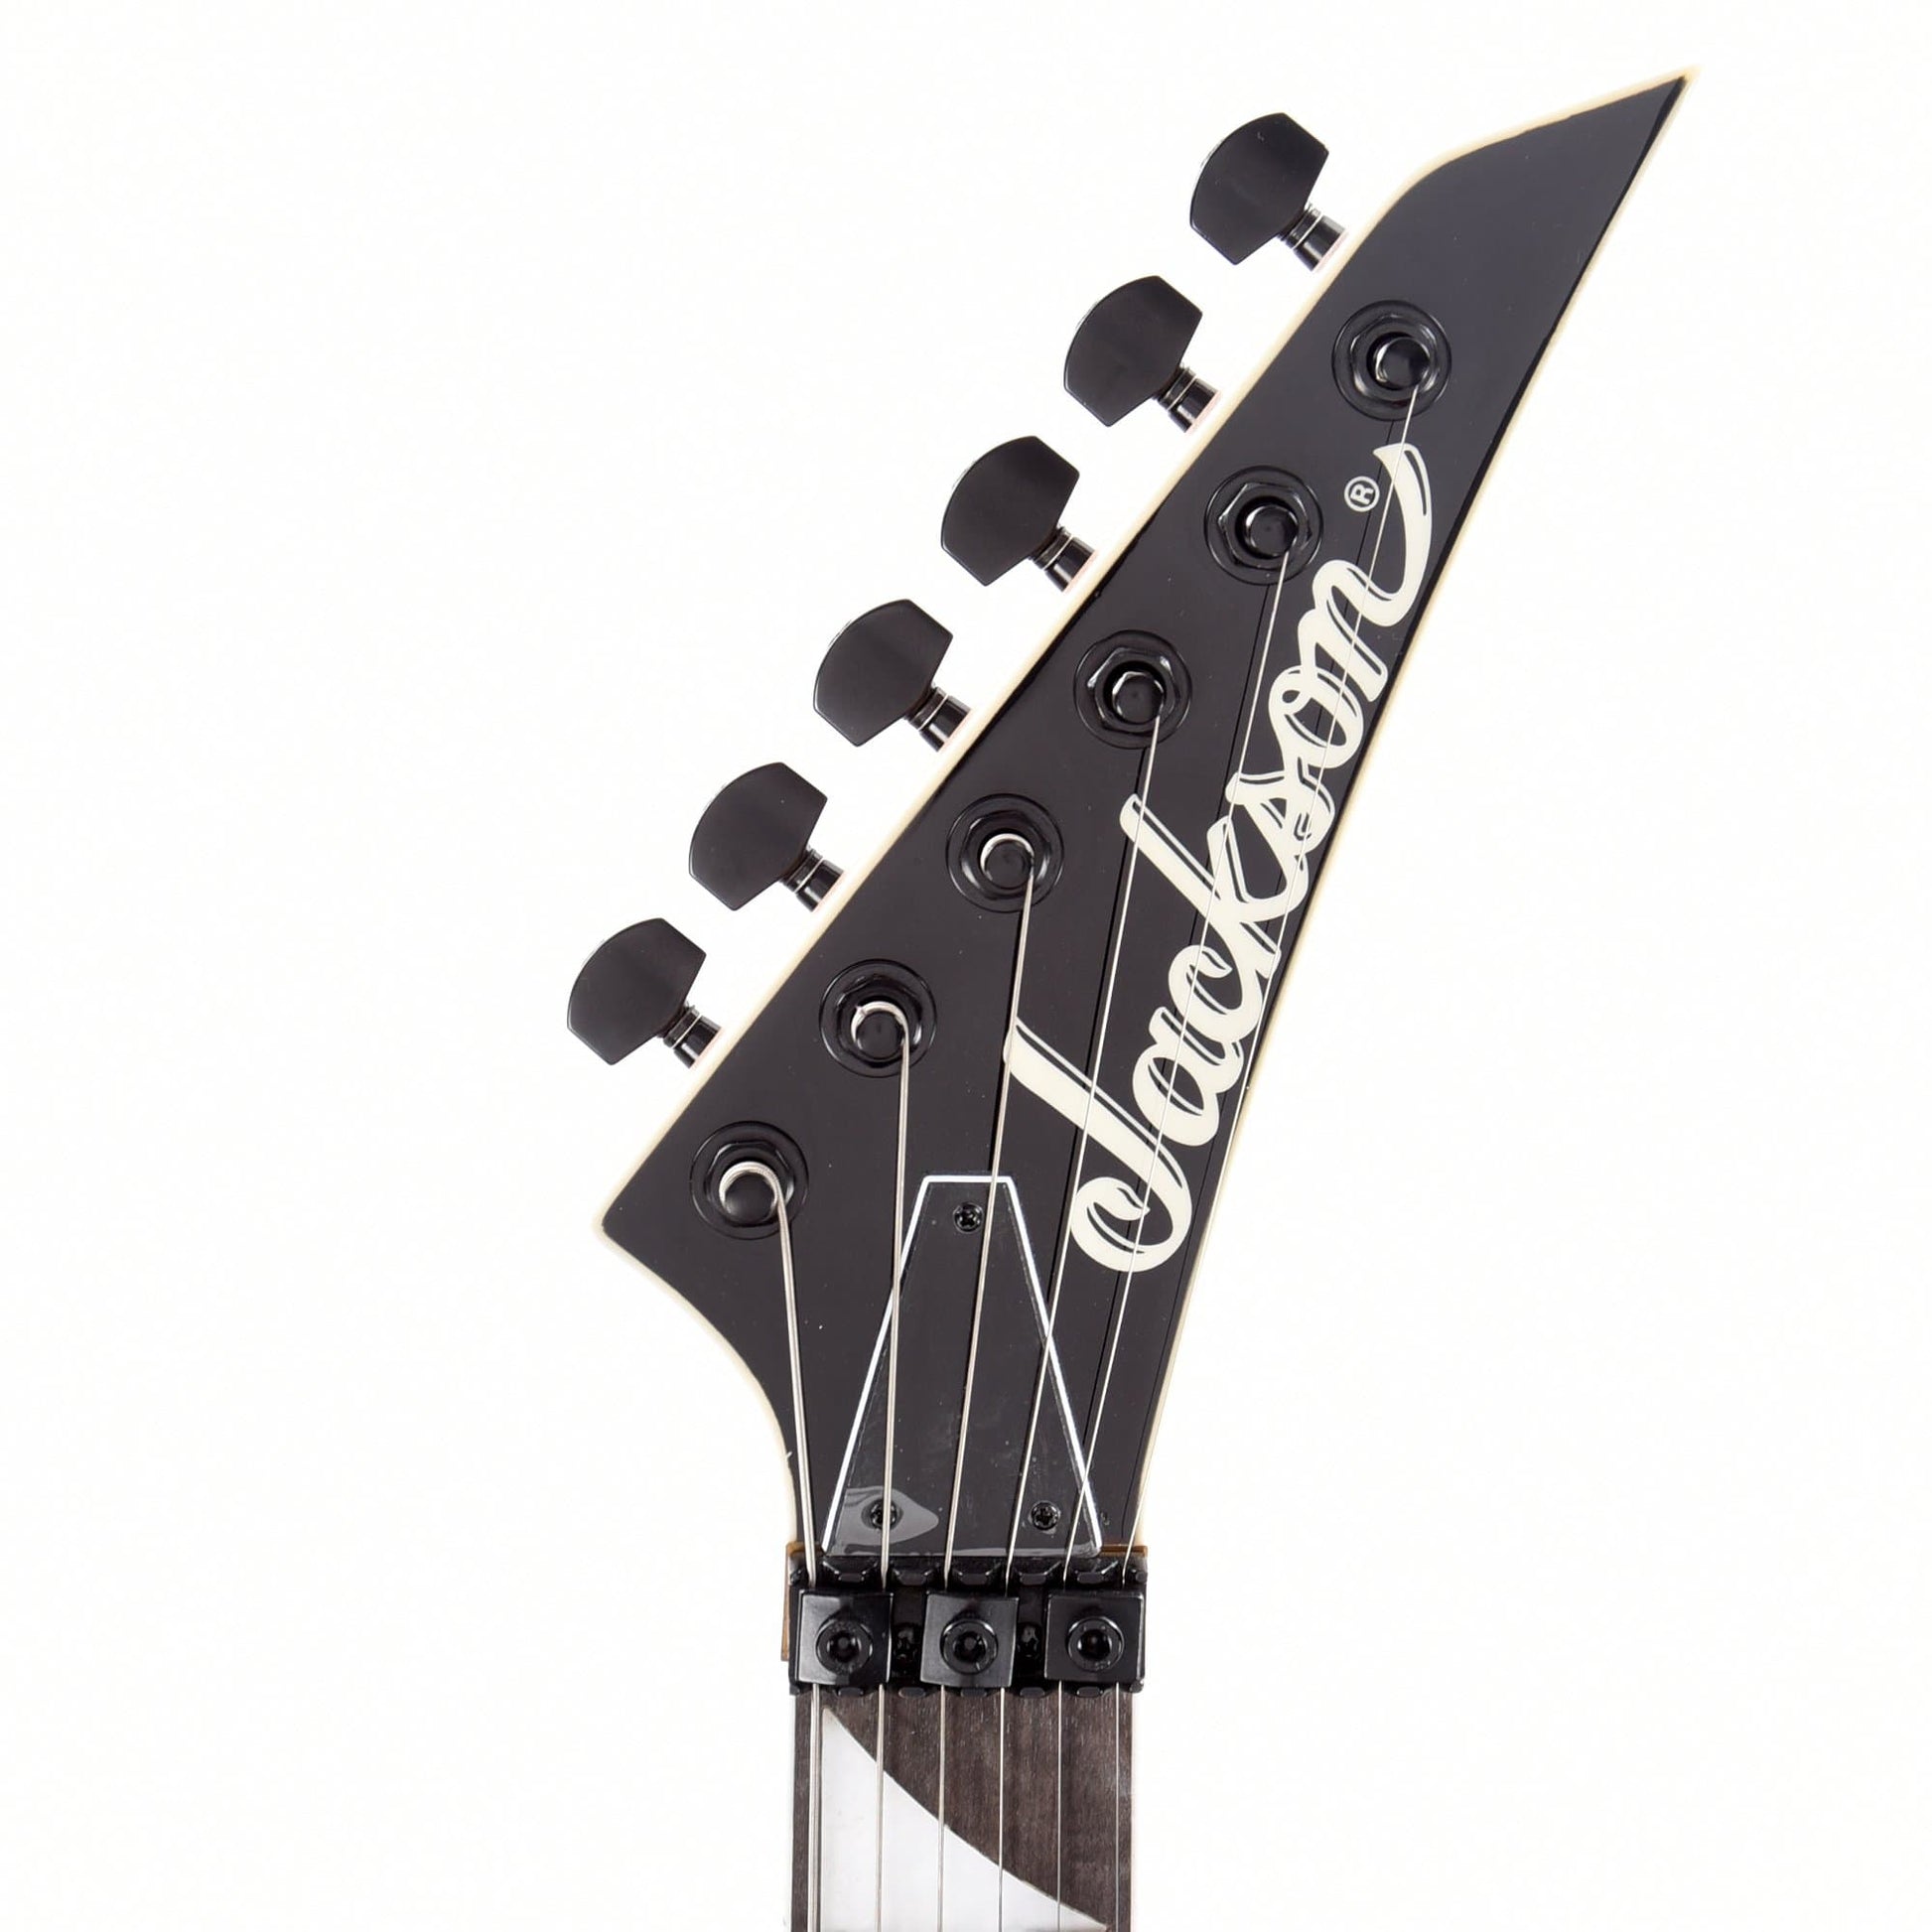 Jackson JS Series Dinky Arch Top JS32Q Transparent Blue Electric Guitars / Solid Body